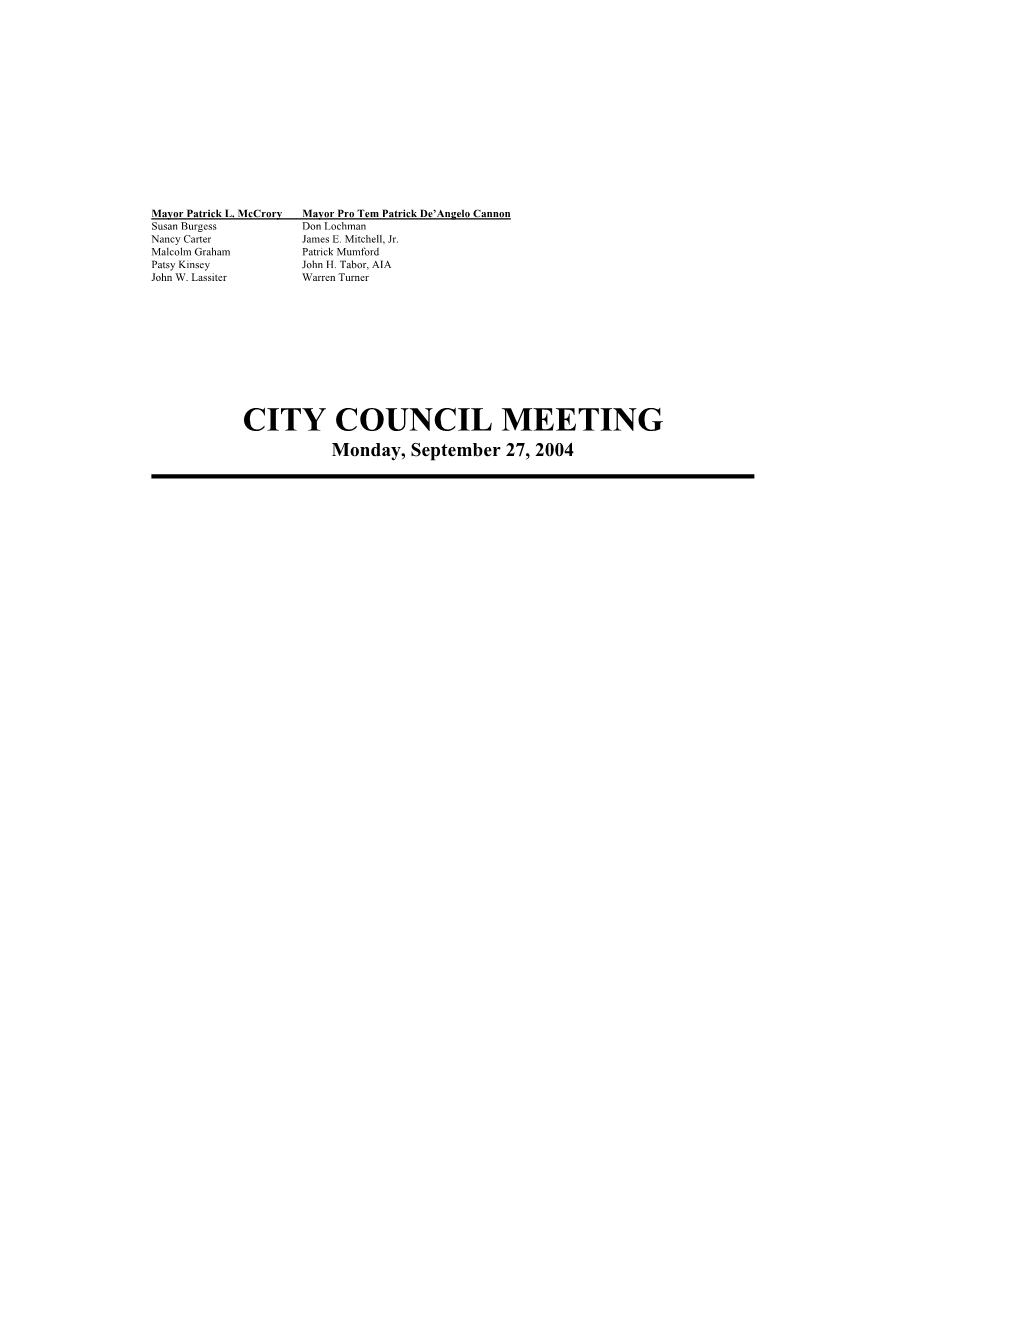 CITY COUNCIL MEETING Monday, September 27, 2004